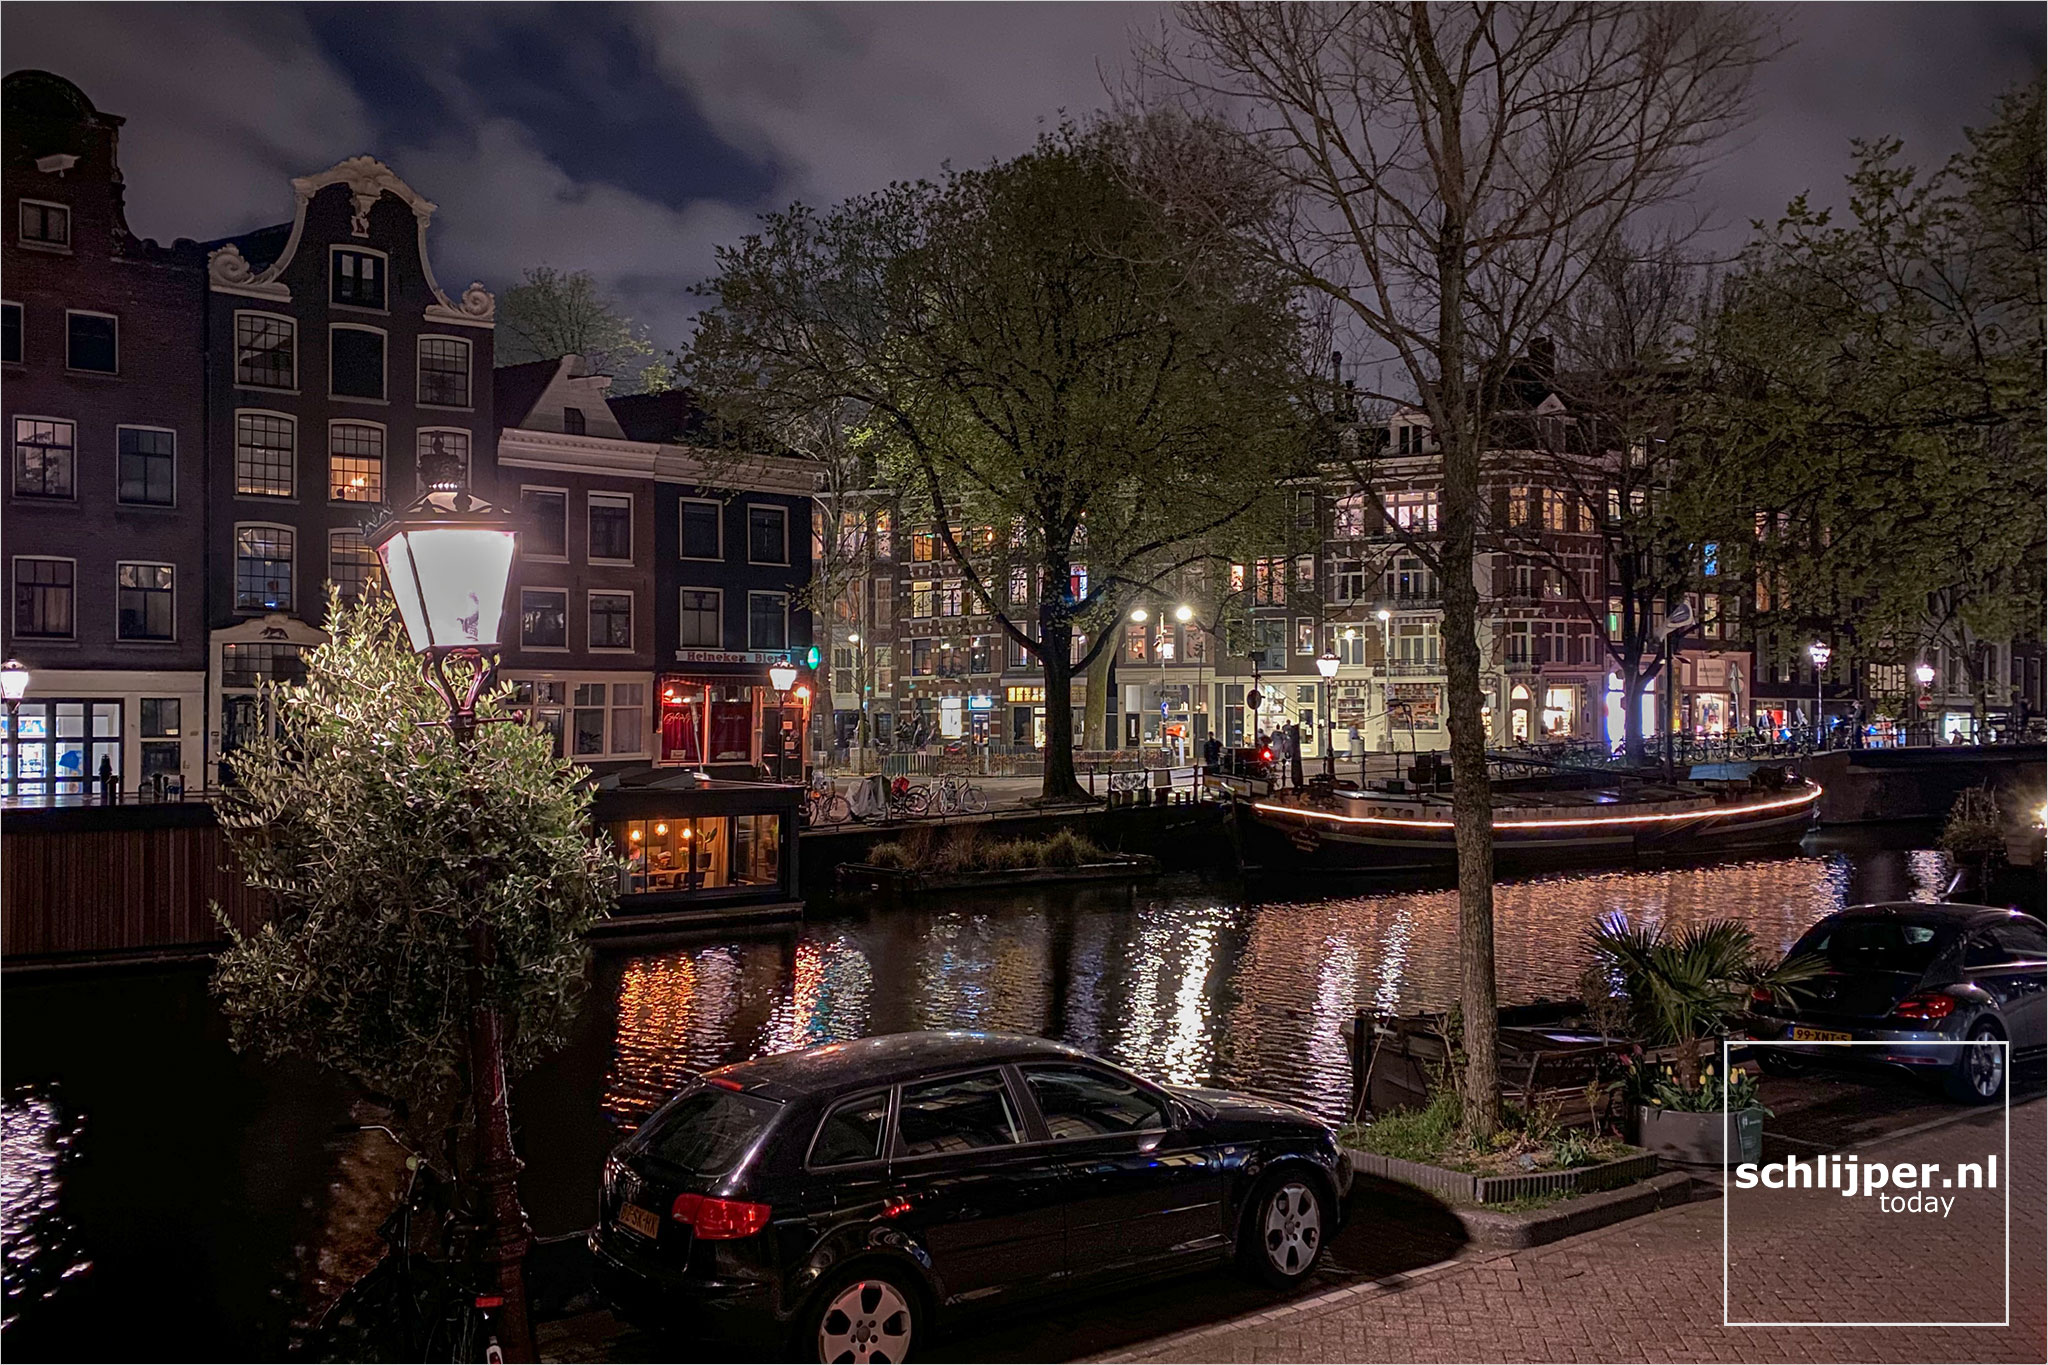 The Netherlands, Amsterdam, 2 april 2021